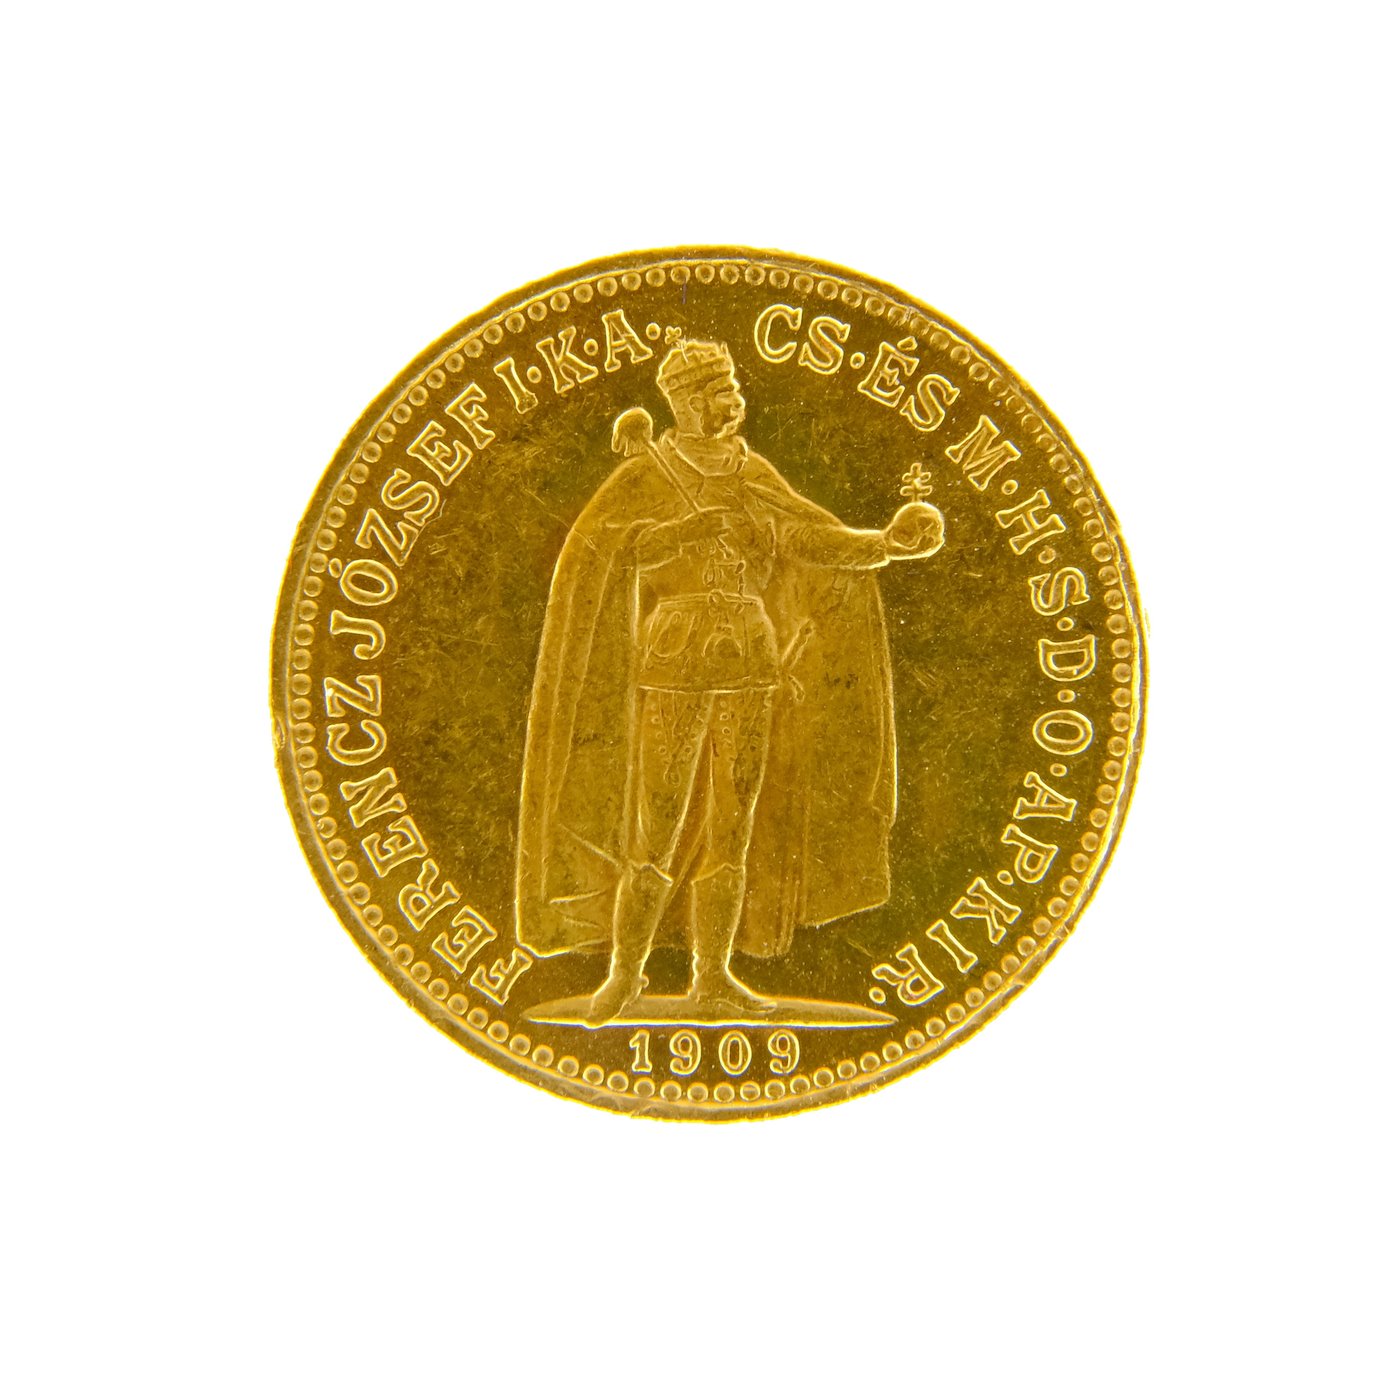 .. - Rakousko Uhersko zlatá 10 Koruna 1909 K.B. uherská, zlato 900/1000, hrubá hmotnost 3,387g